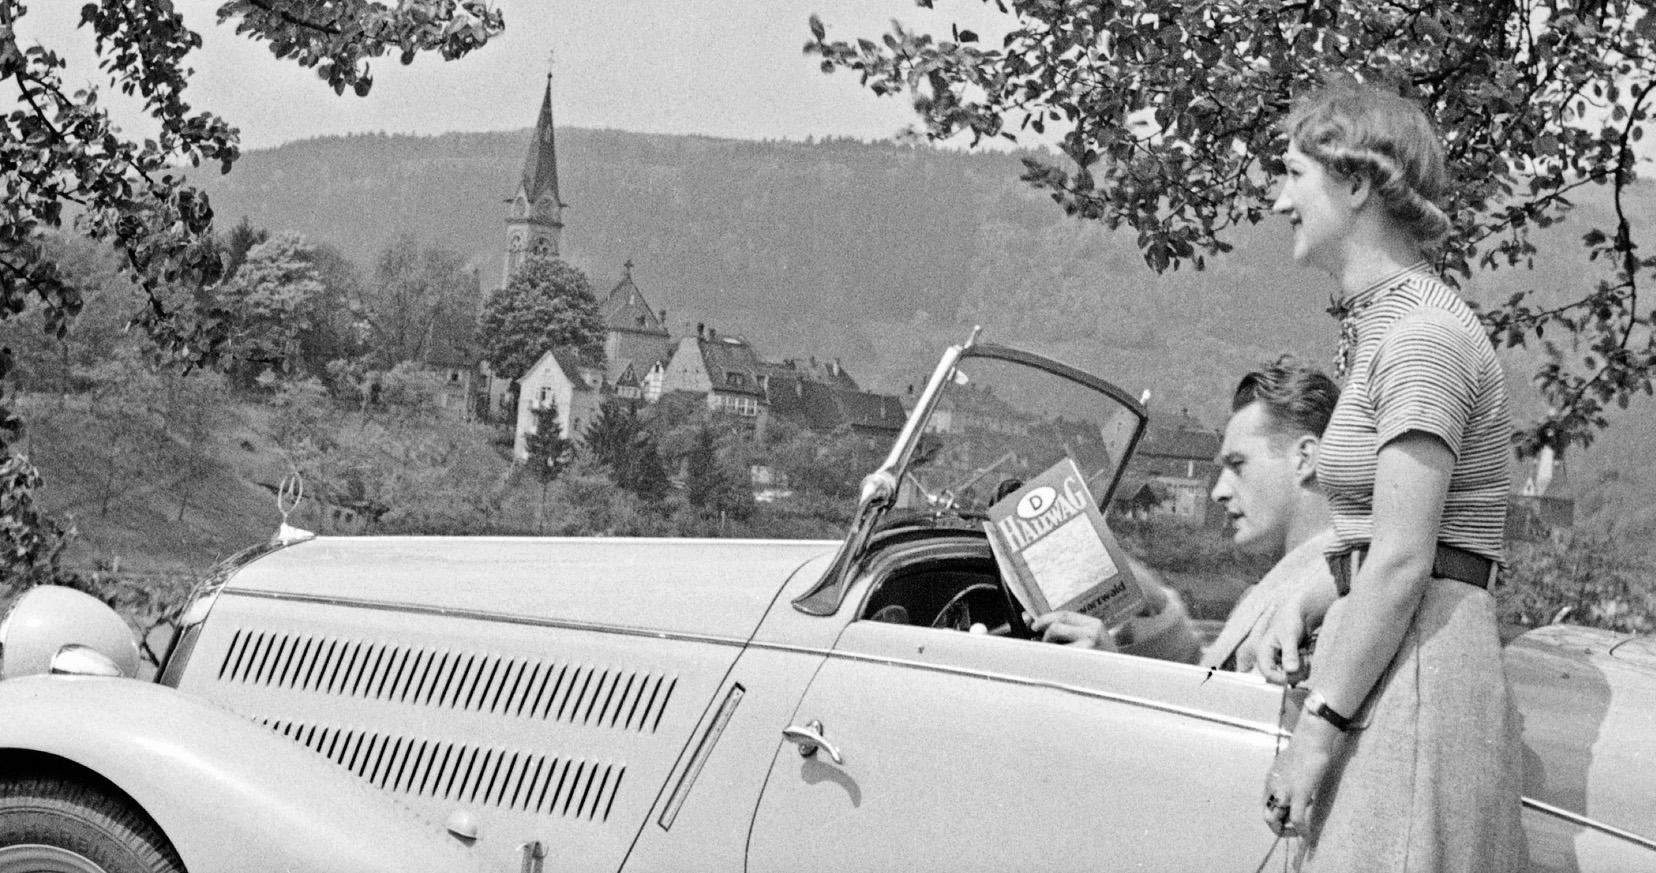 To Neckargemuend Mercedes Benz car near Heidelberg, Germany 1936, Printed Later  - Photograph by Karl Heinrich Lämmel